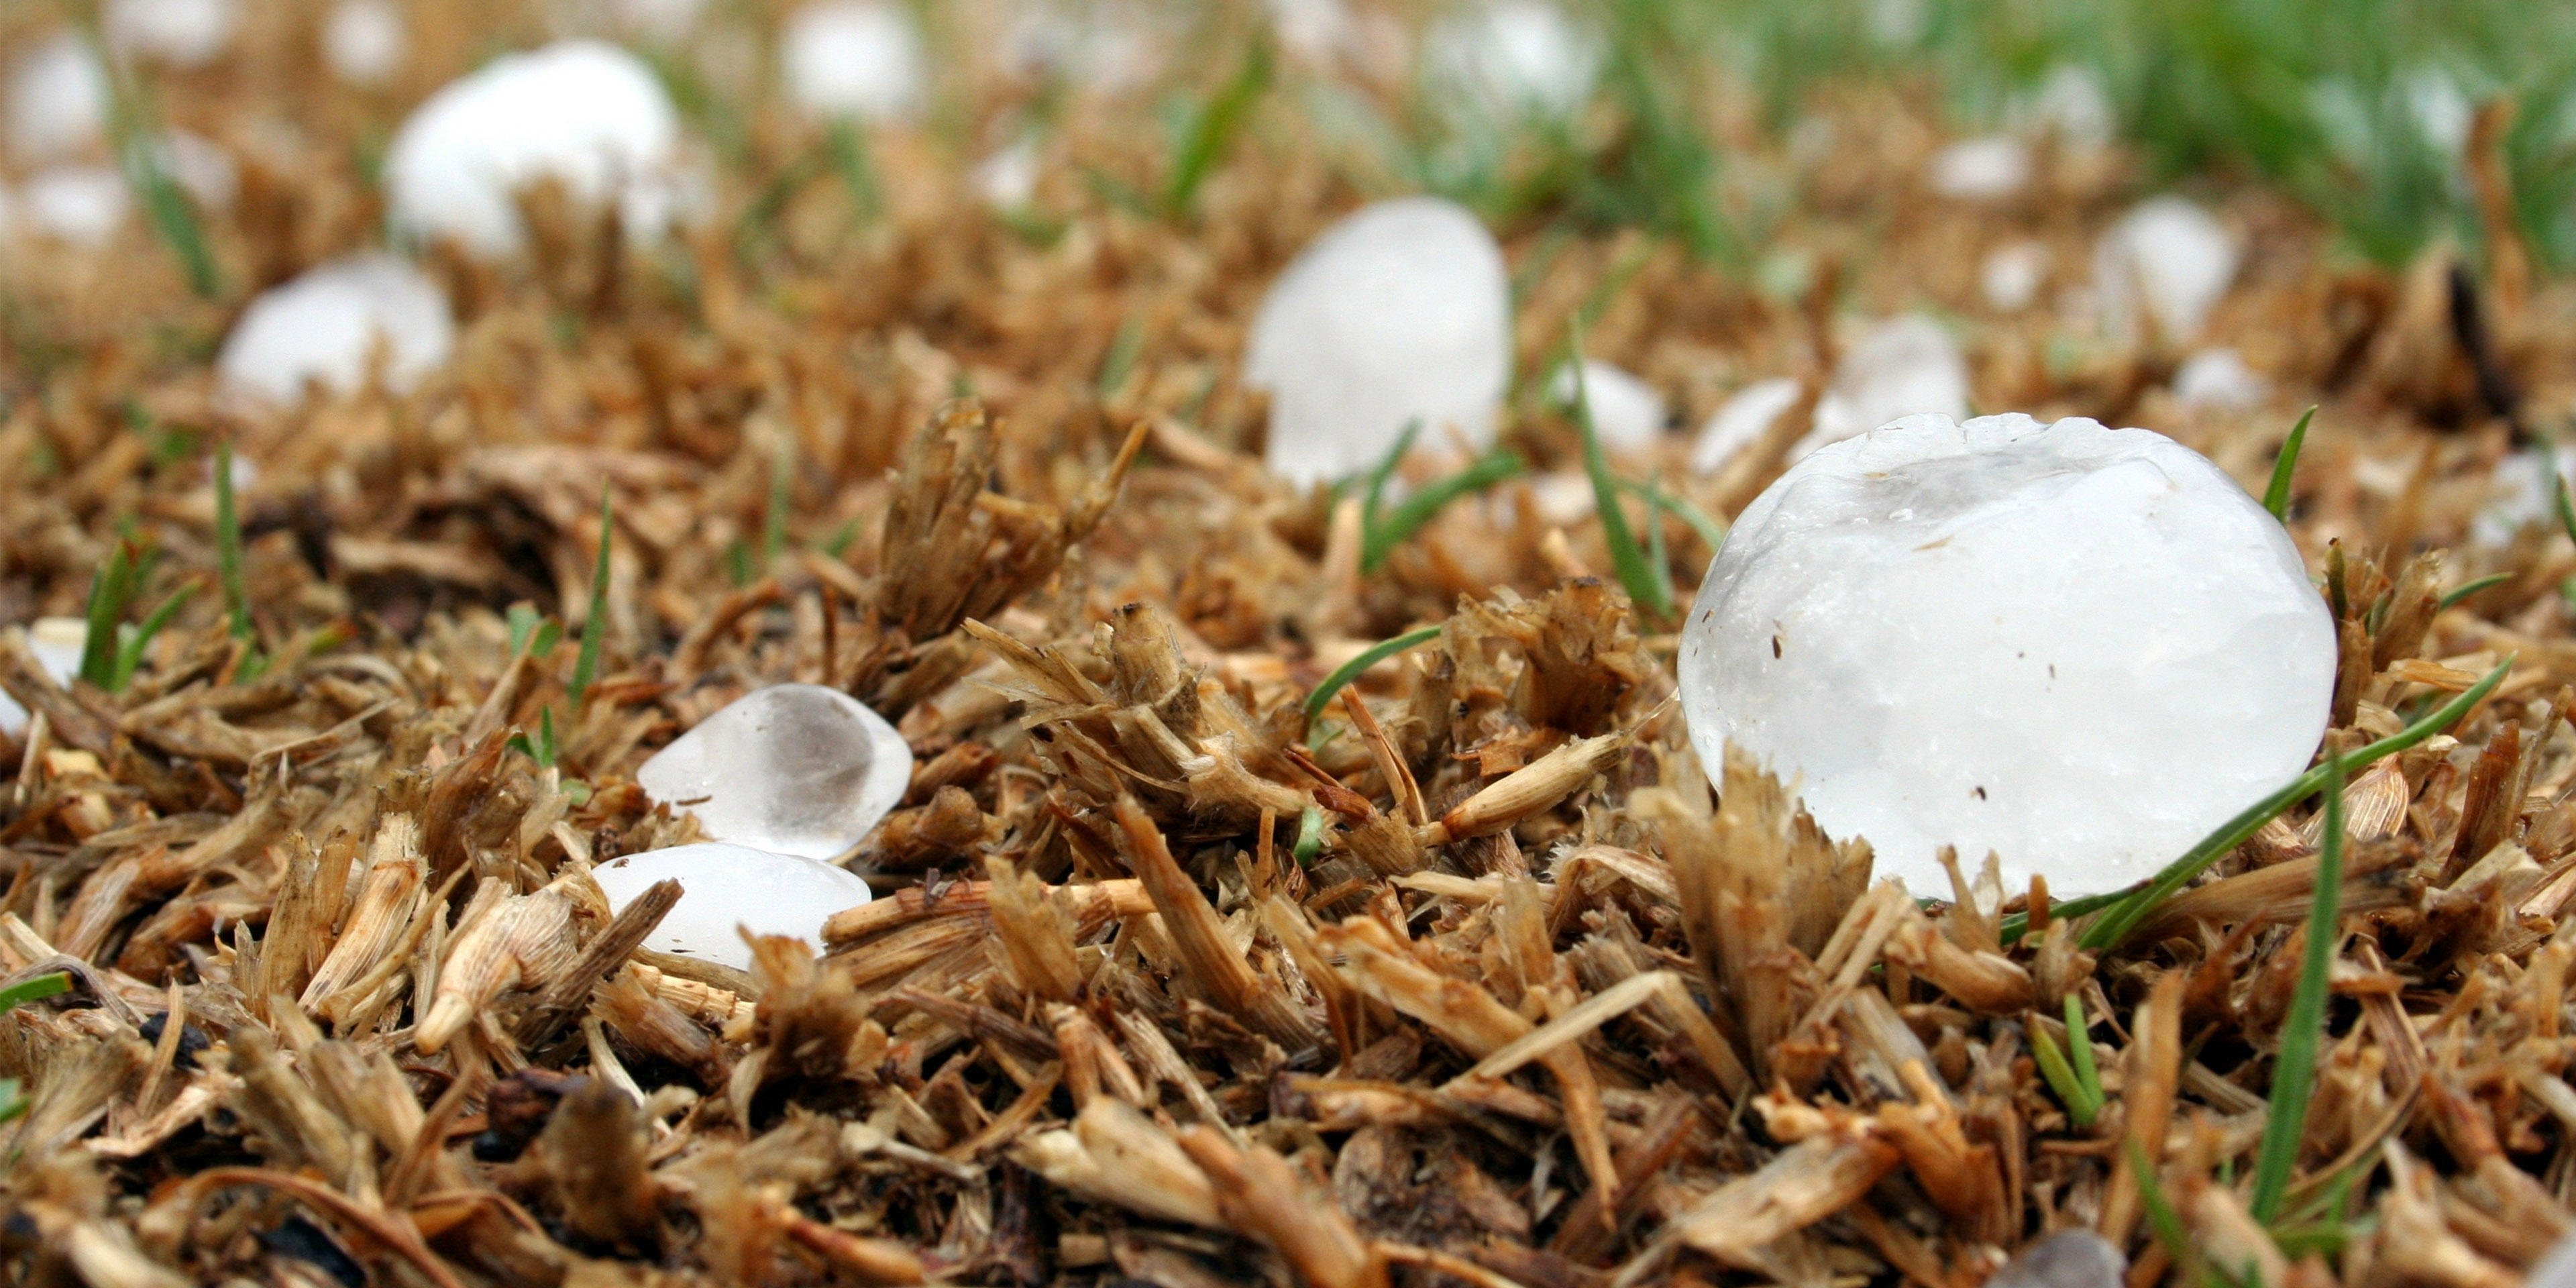 Large hail stones on grass